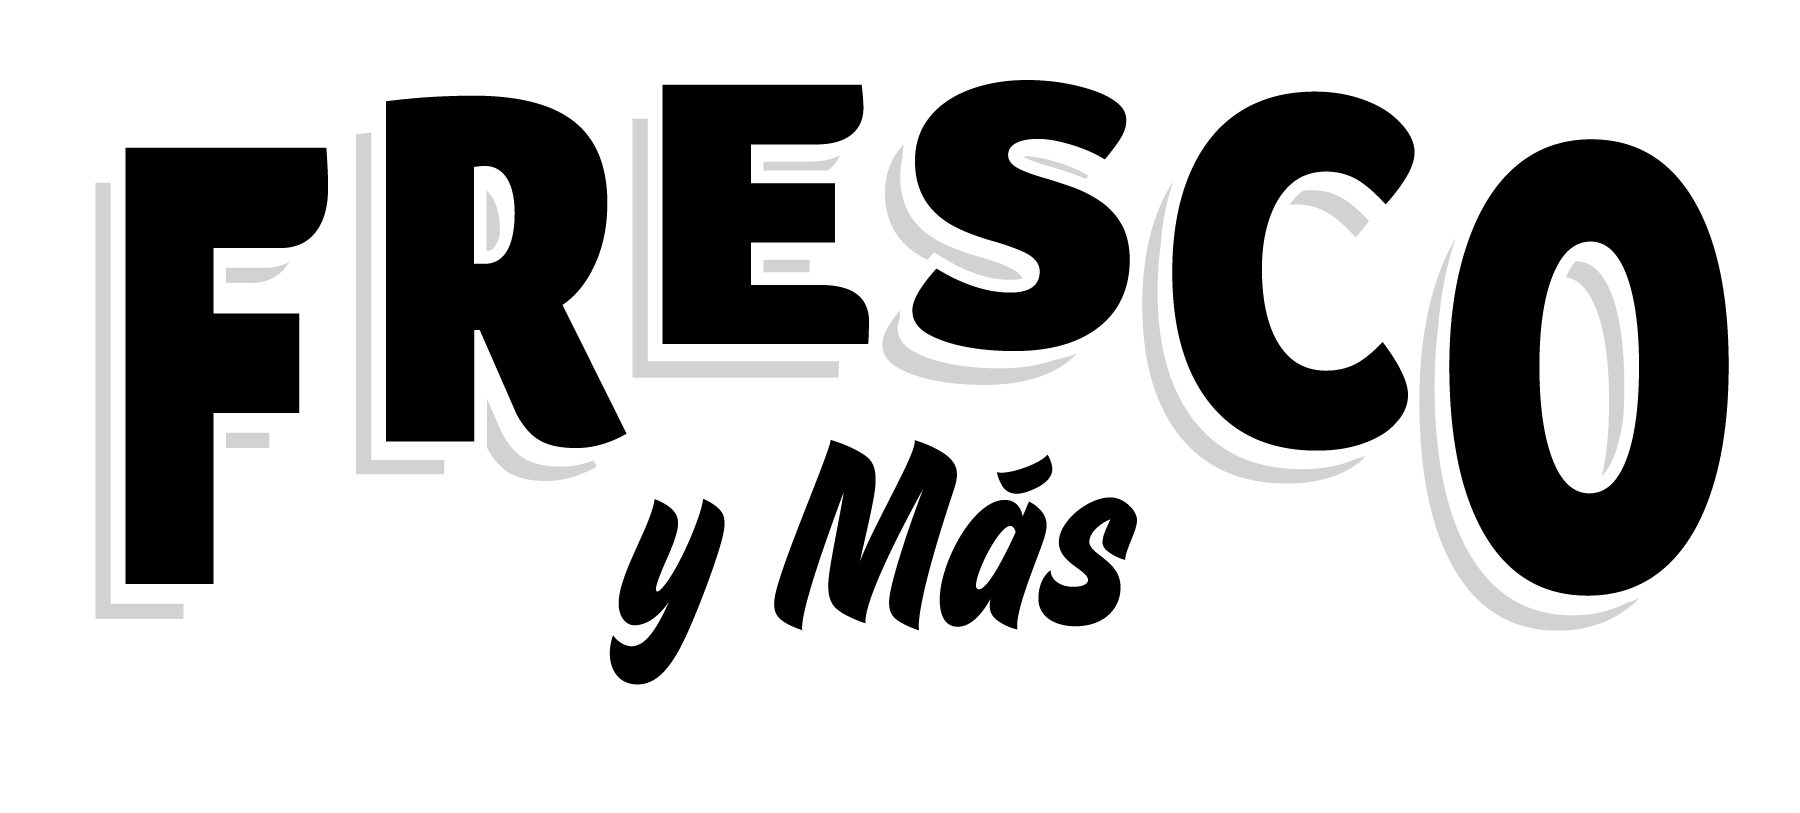 Fresco Logo - Fresco y mas logo.png